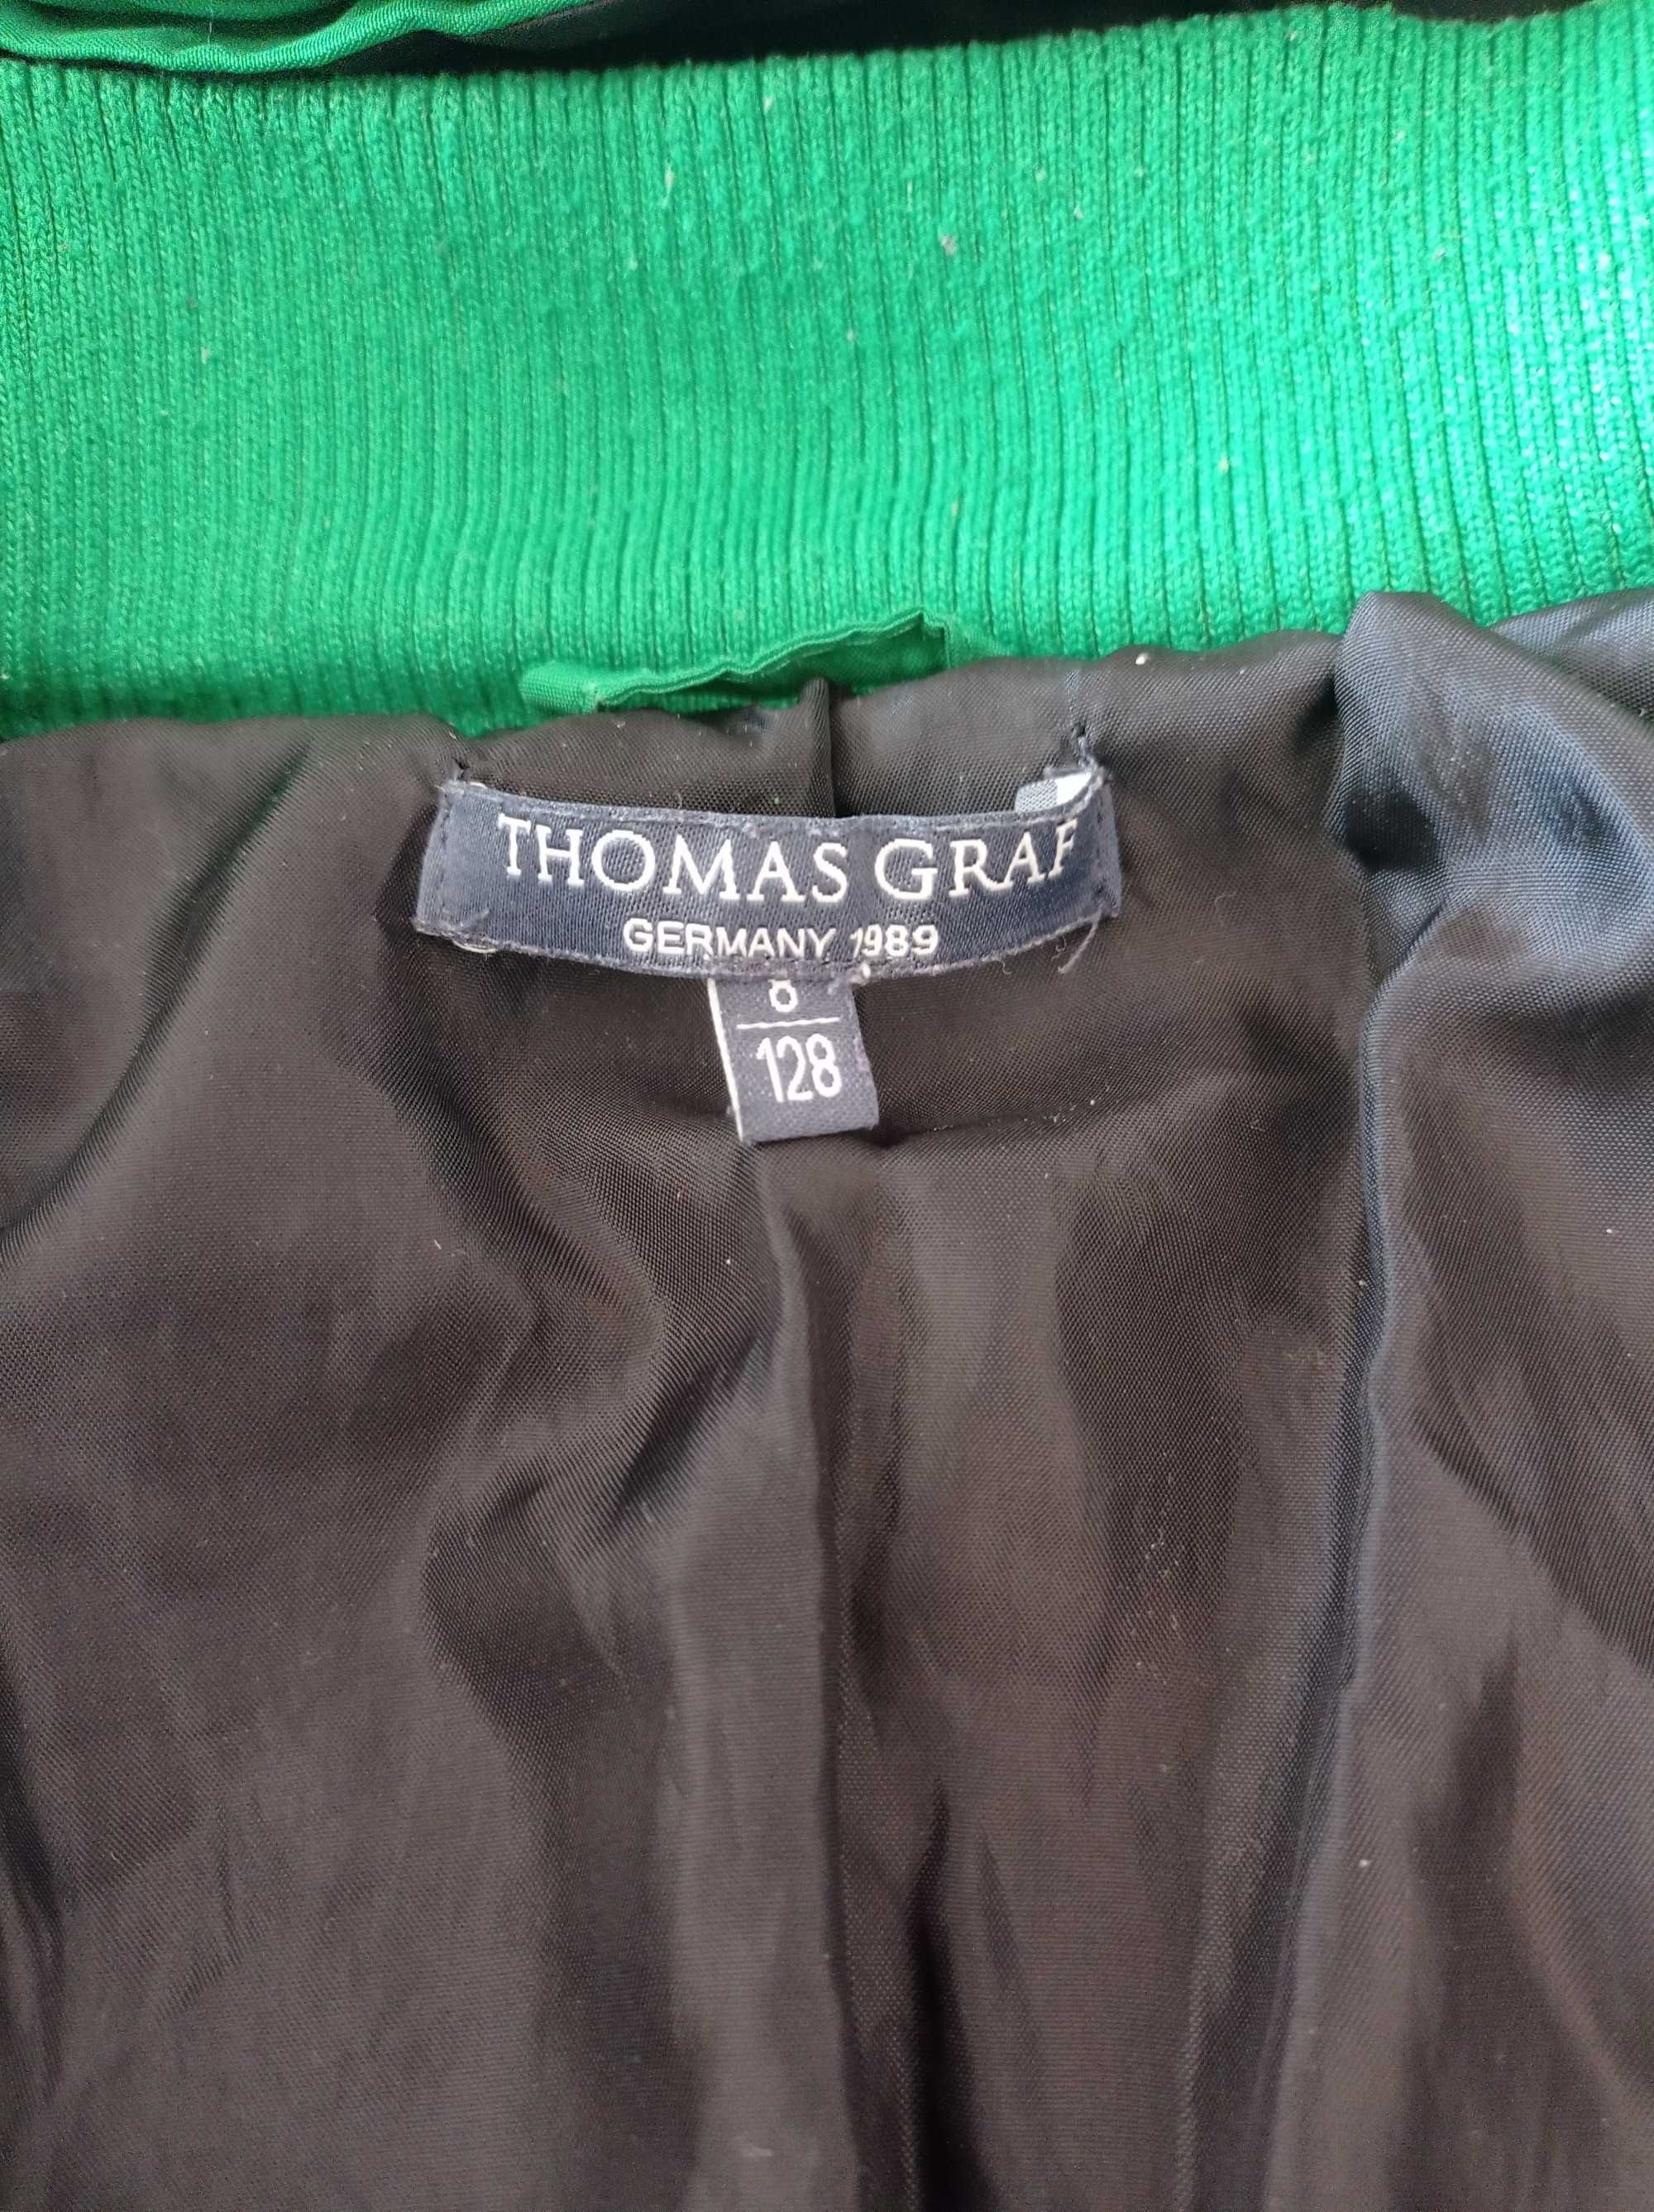 Куртка Thomas Graff, рост 128